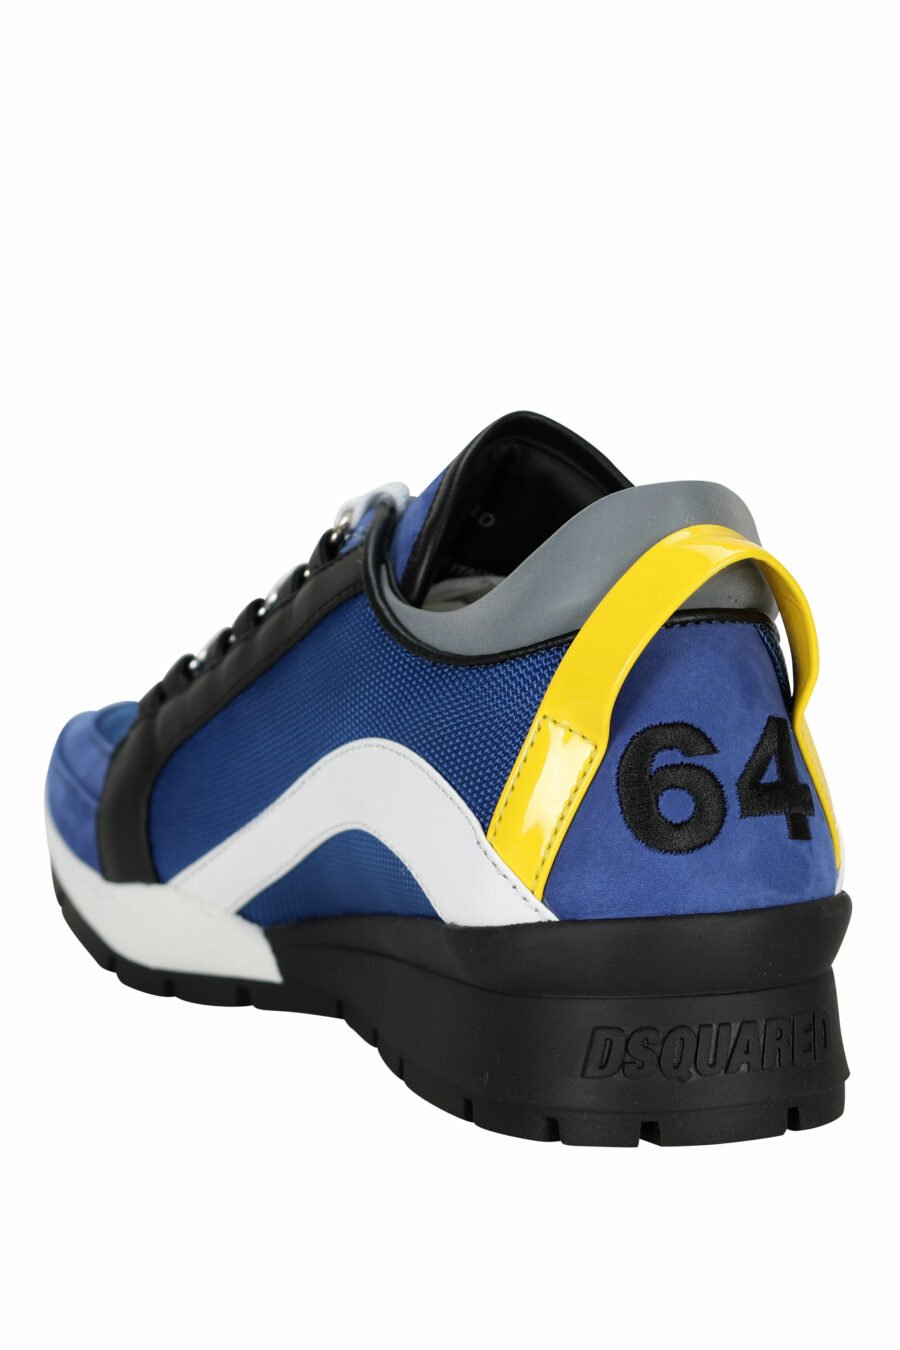 Zapatillas azules "legendary" con detalle amarillo - 8055777300343 3